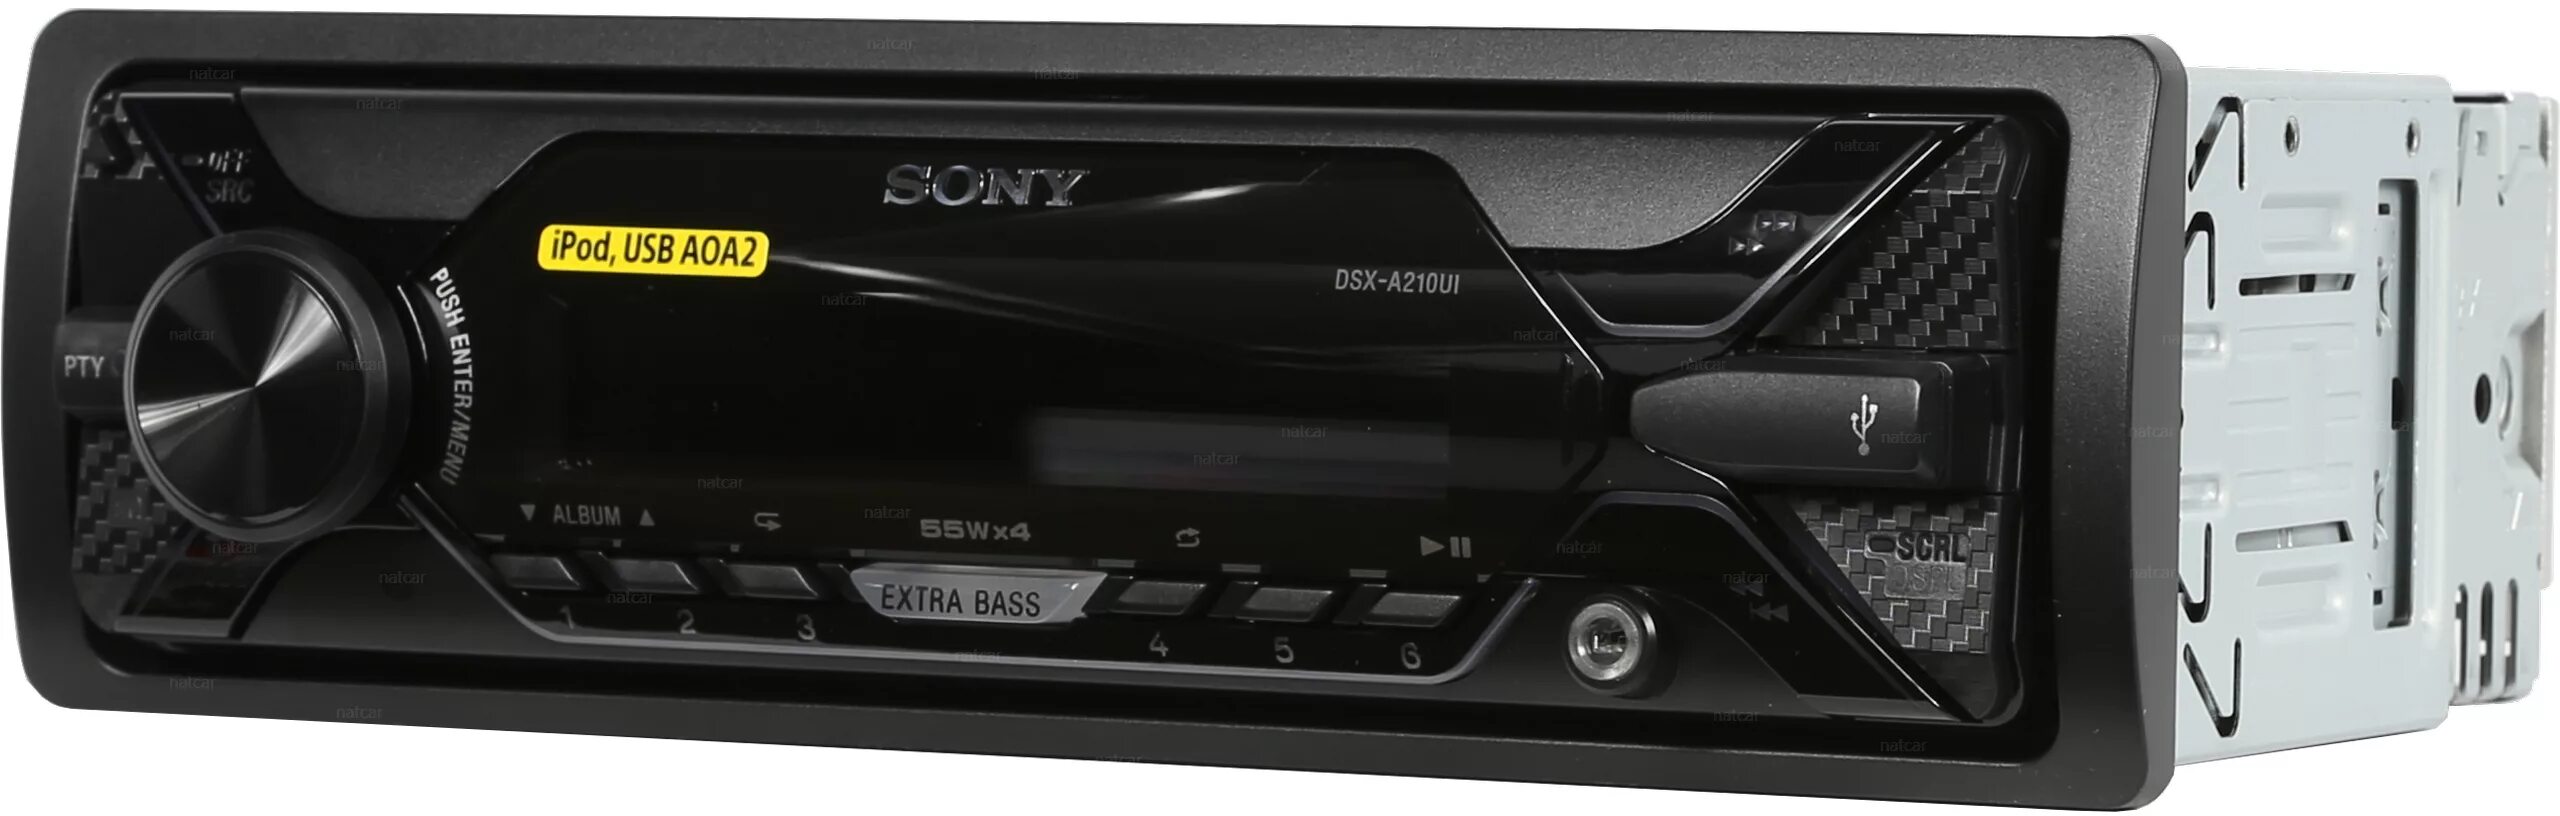 Sony dsx купить. Sony DSX-a210ui. Sony DSX-a212ui. Sony DSX-a210ui/q. Автомагнитола Sony DSX-a210ui/q.